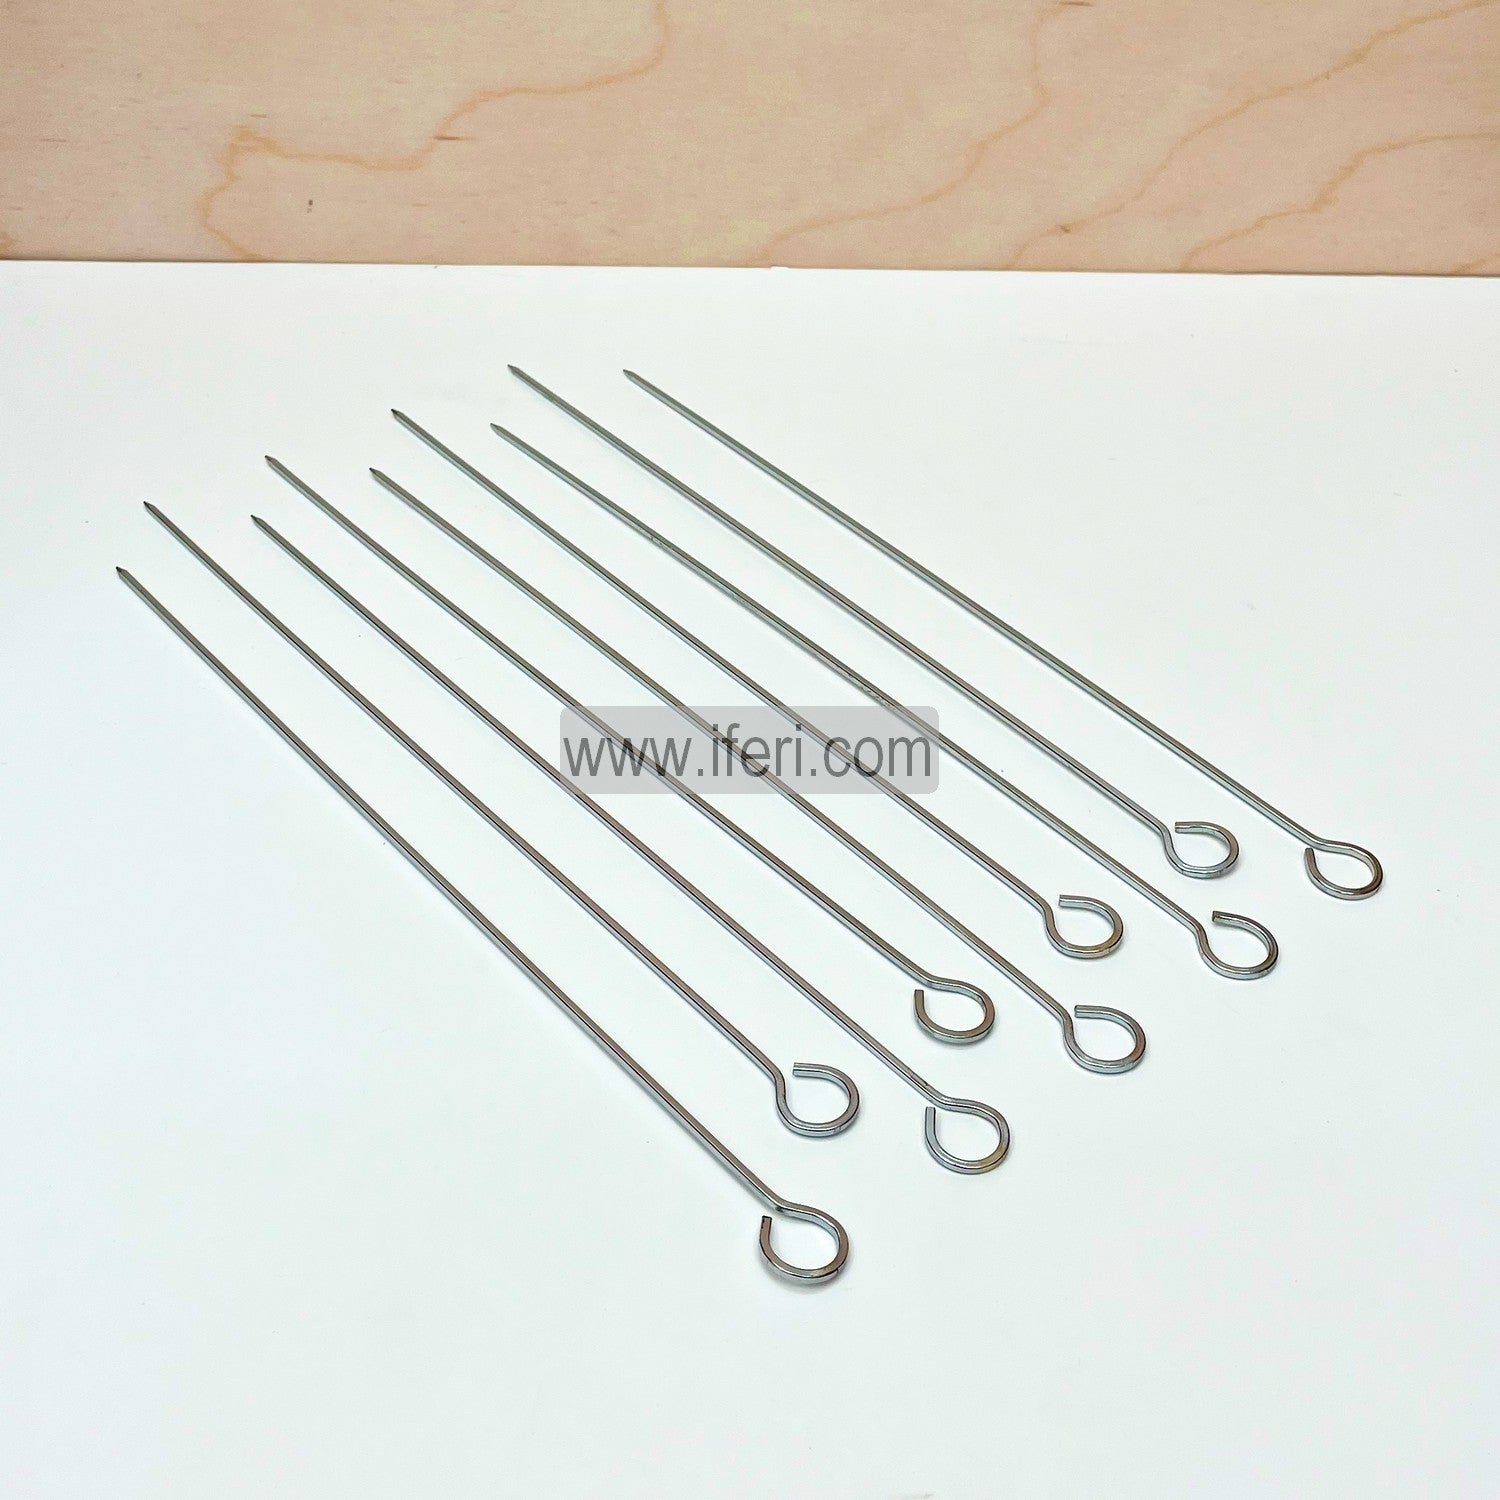 10 Pcs Stainless Steel BBQ Skewers Needle Kebab Stick JNP45792